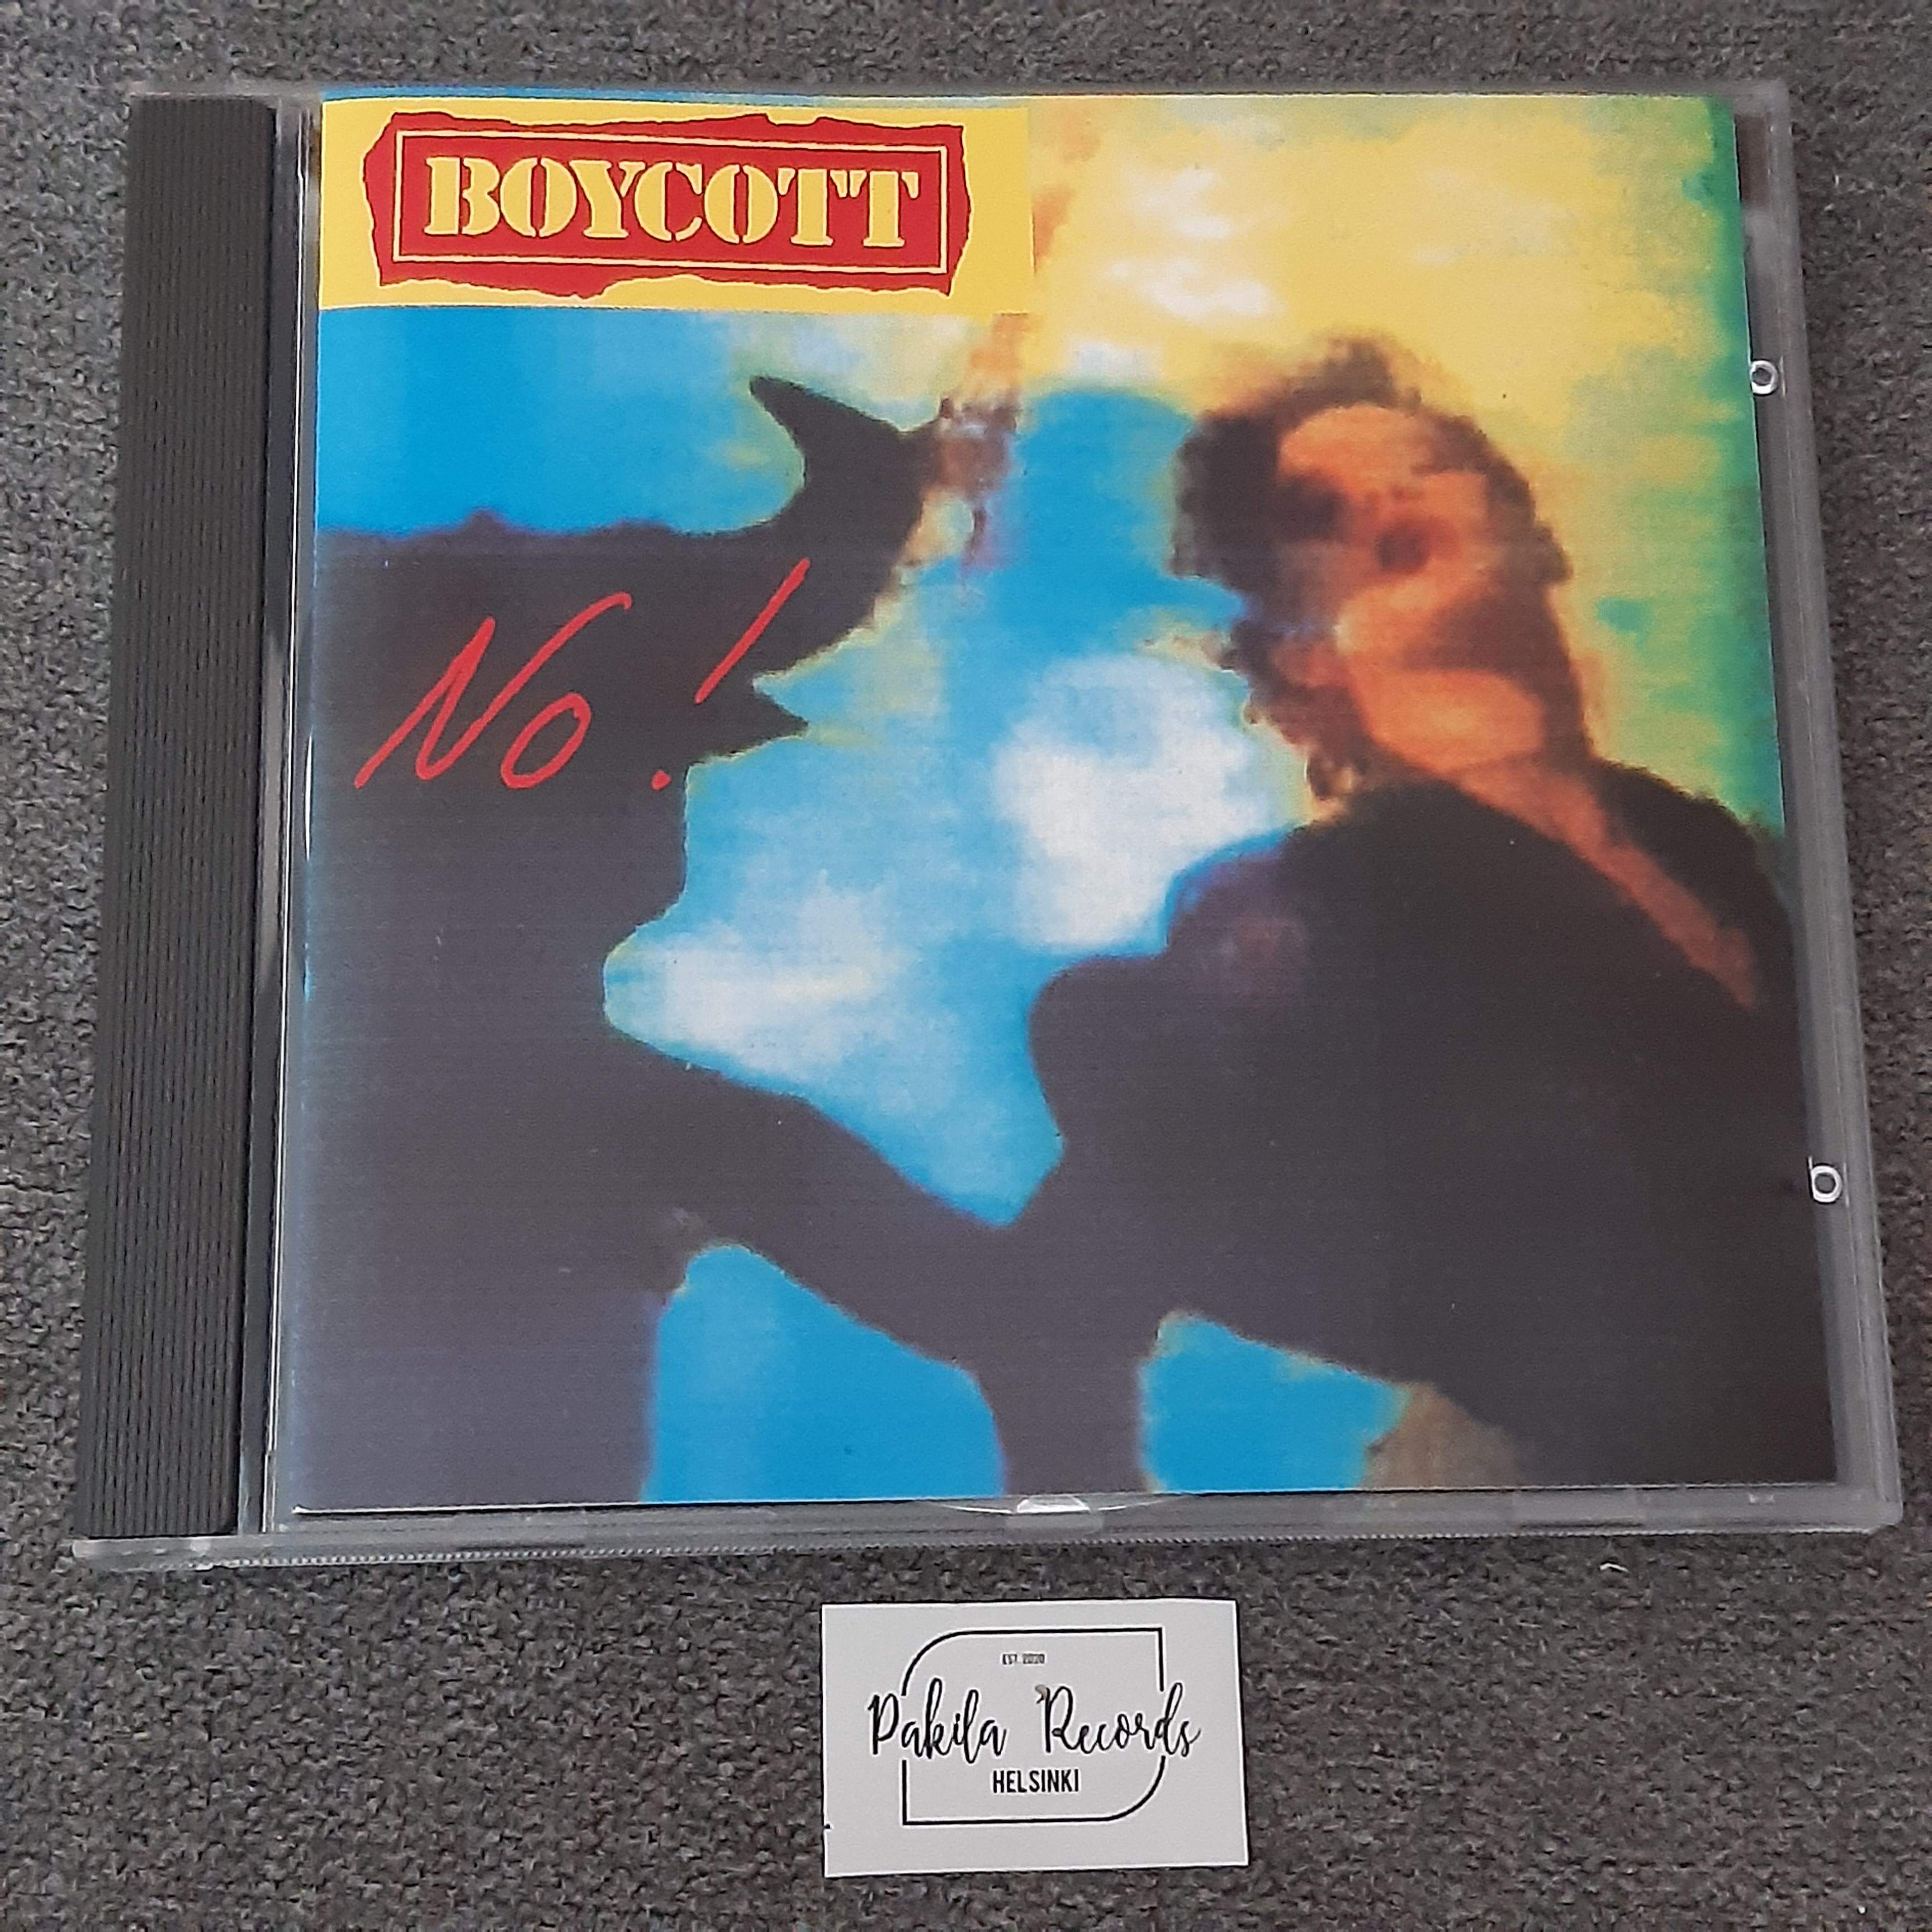 Boycott - No! - CD (käytetty)